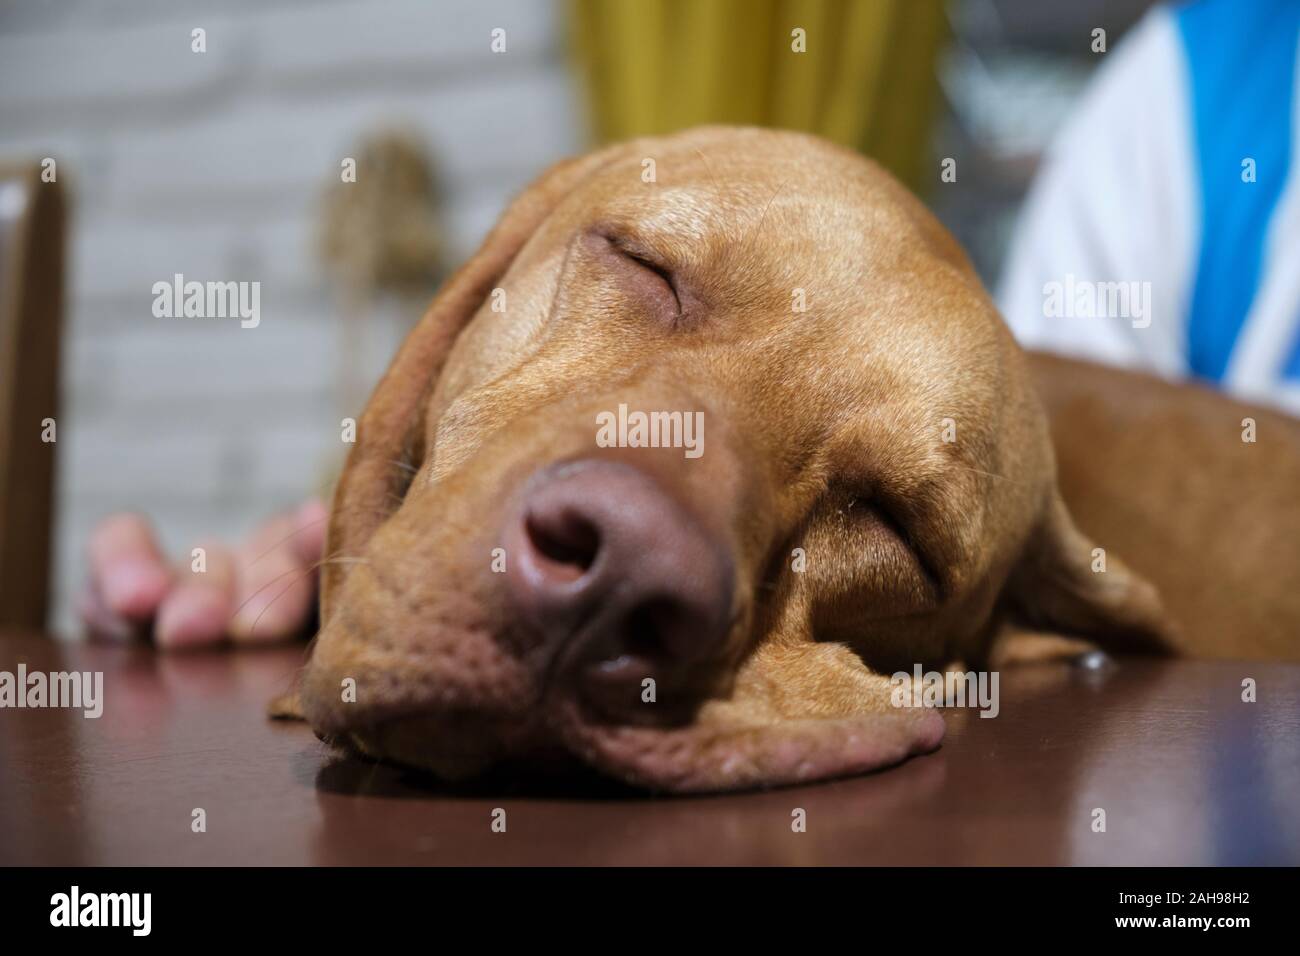 a close up view of a vizsla face sleeping on a table Stock Photo